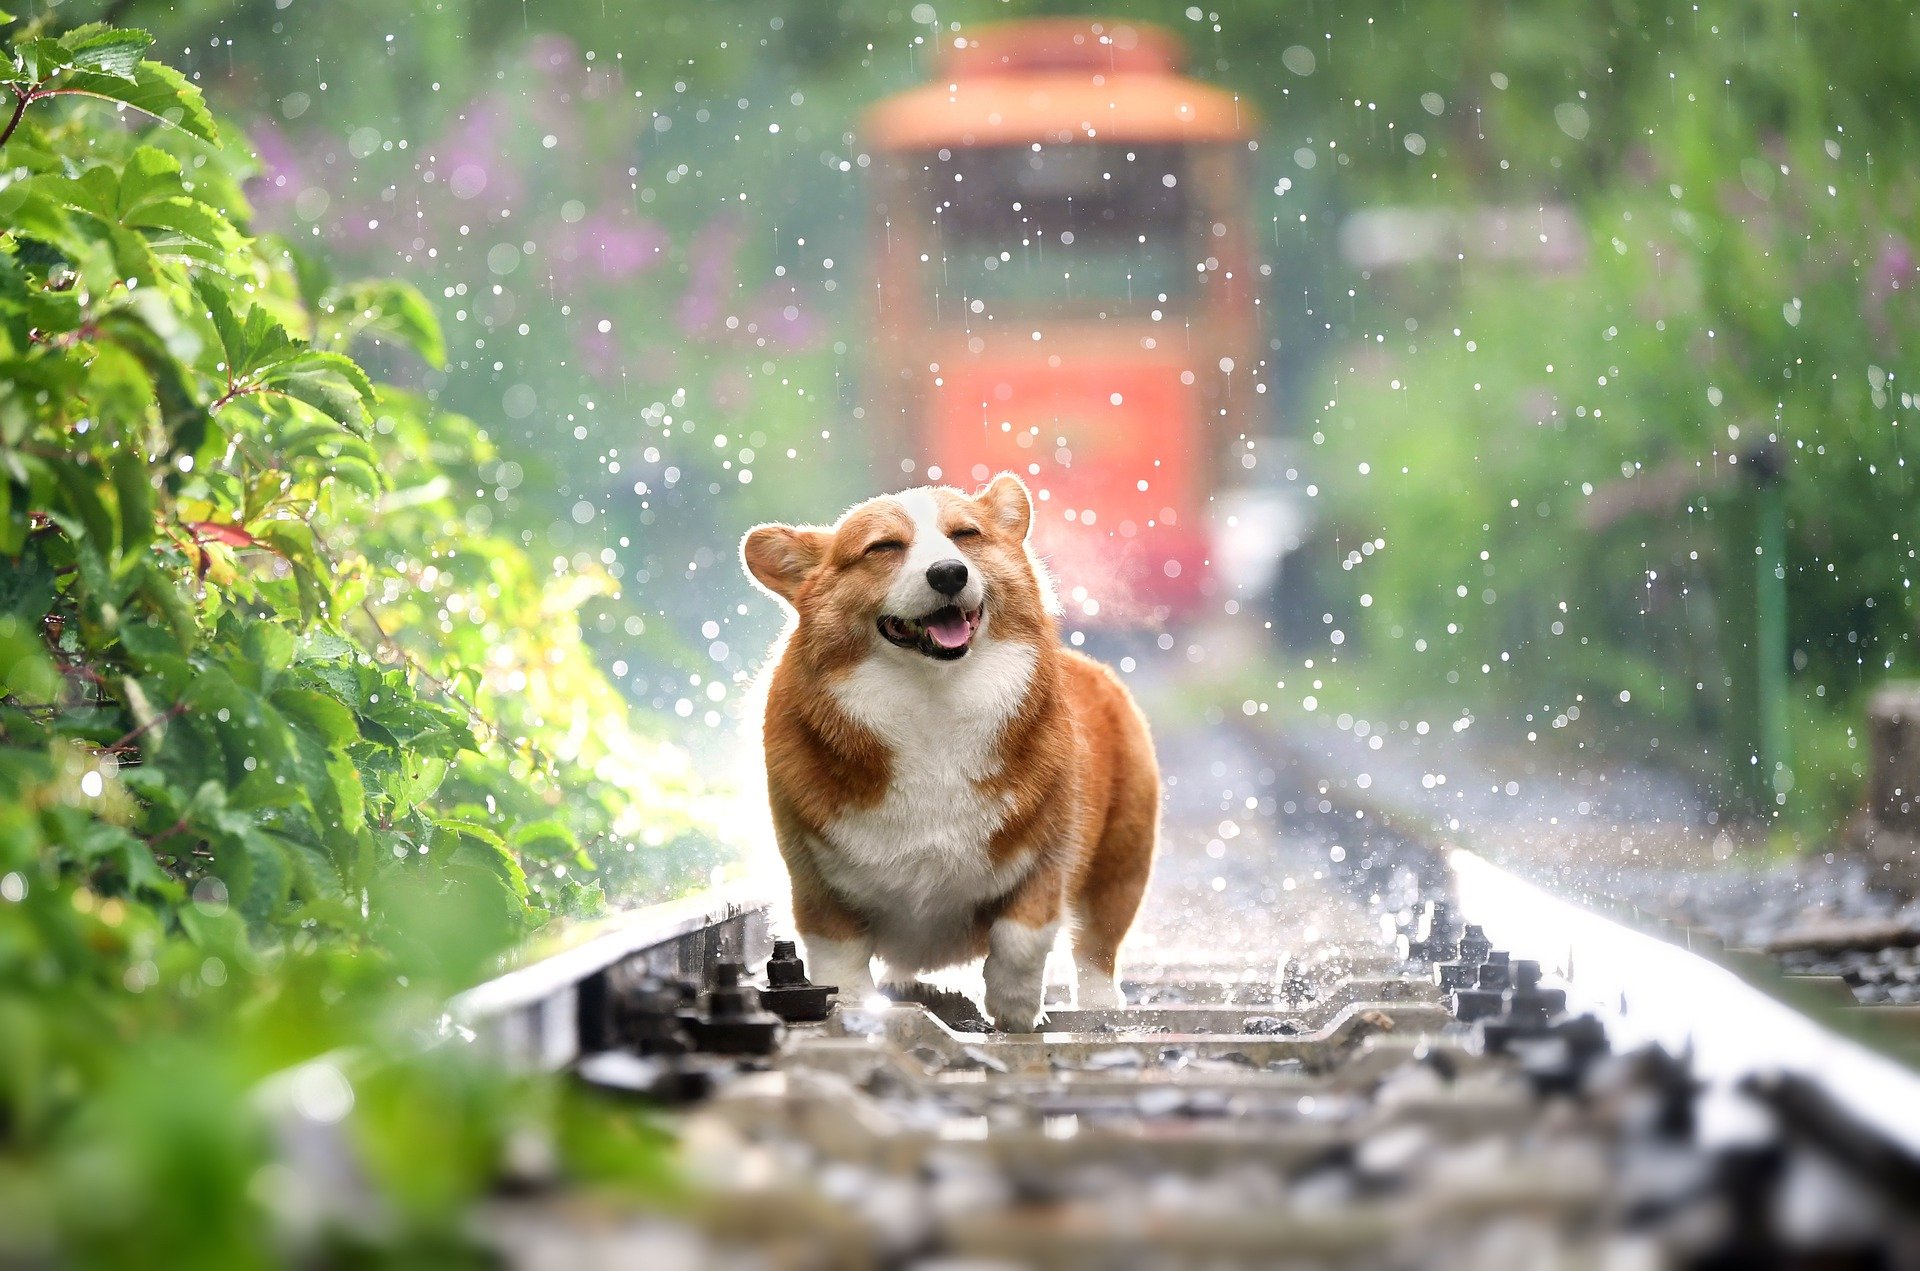 Dog shaking water off walking on railroad tracks.